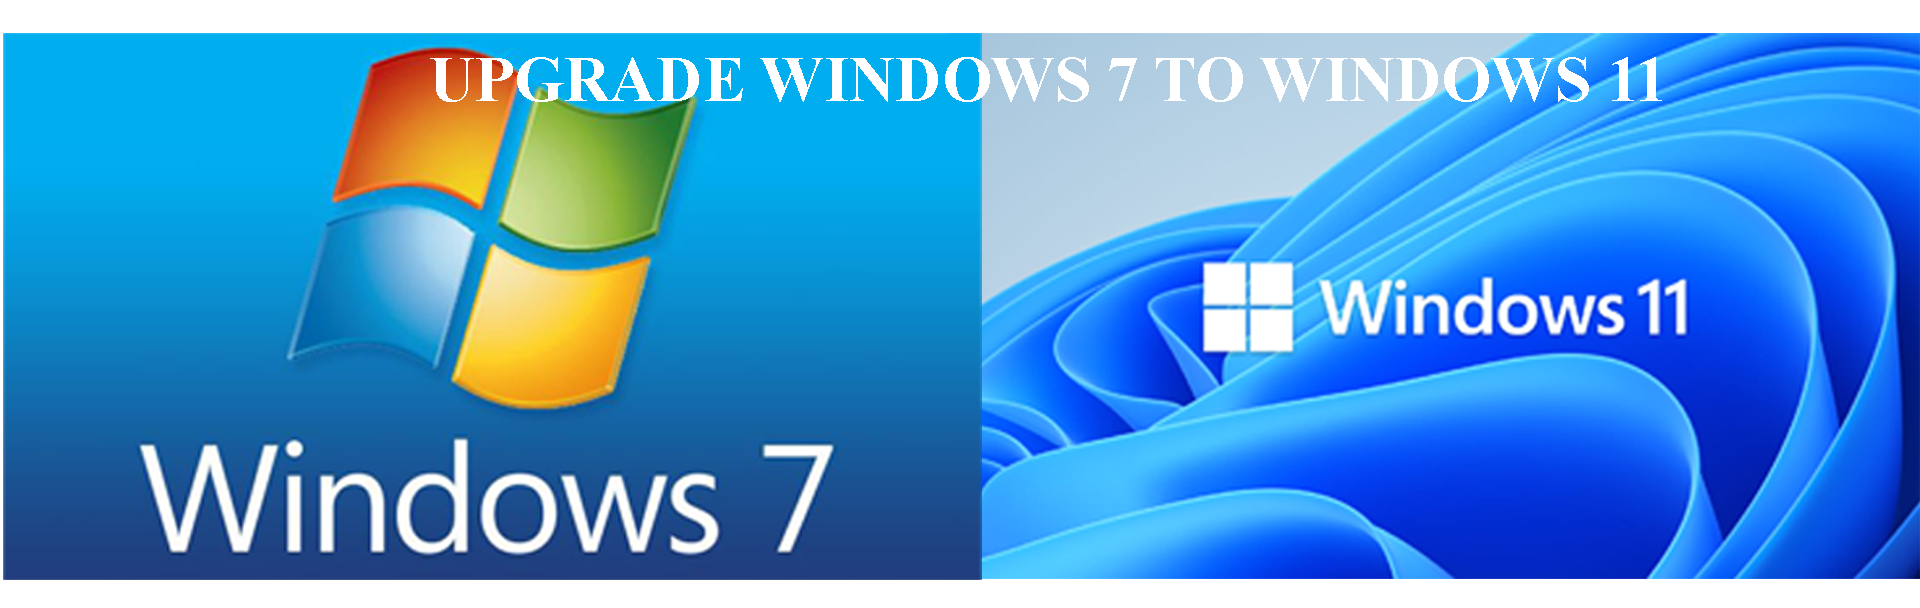 How to upgrade Windows 7 to Windows 11